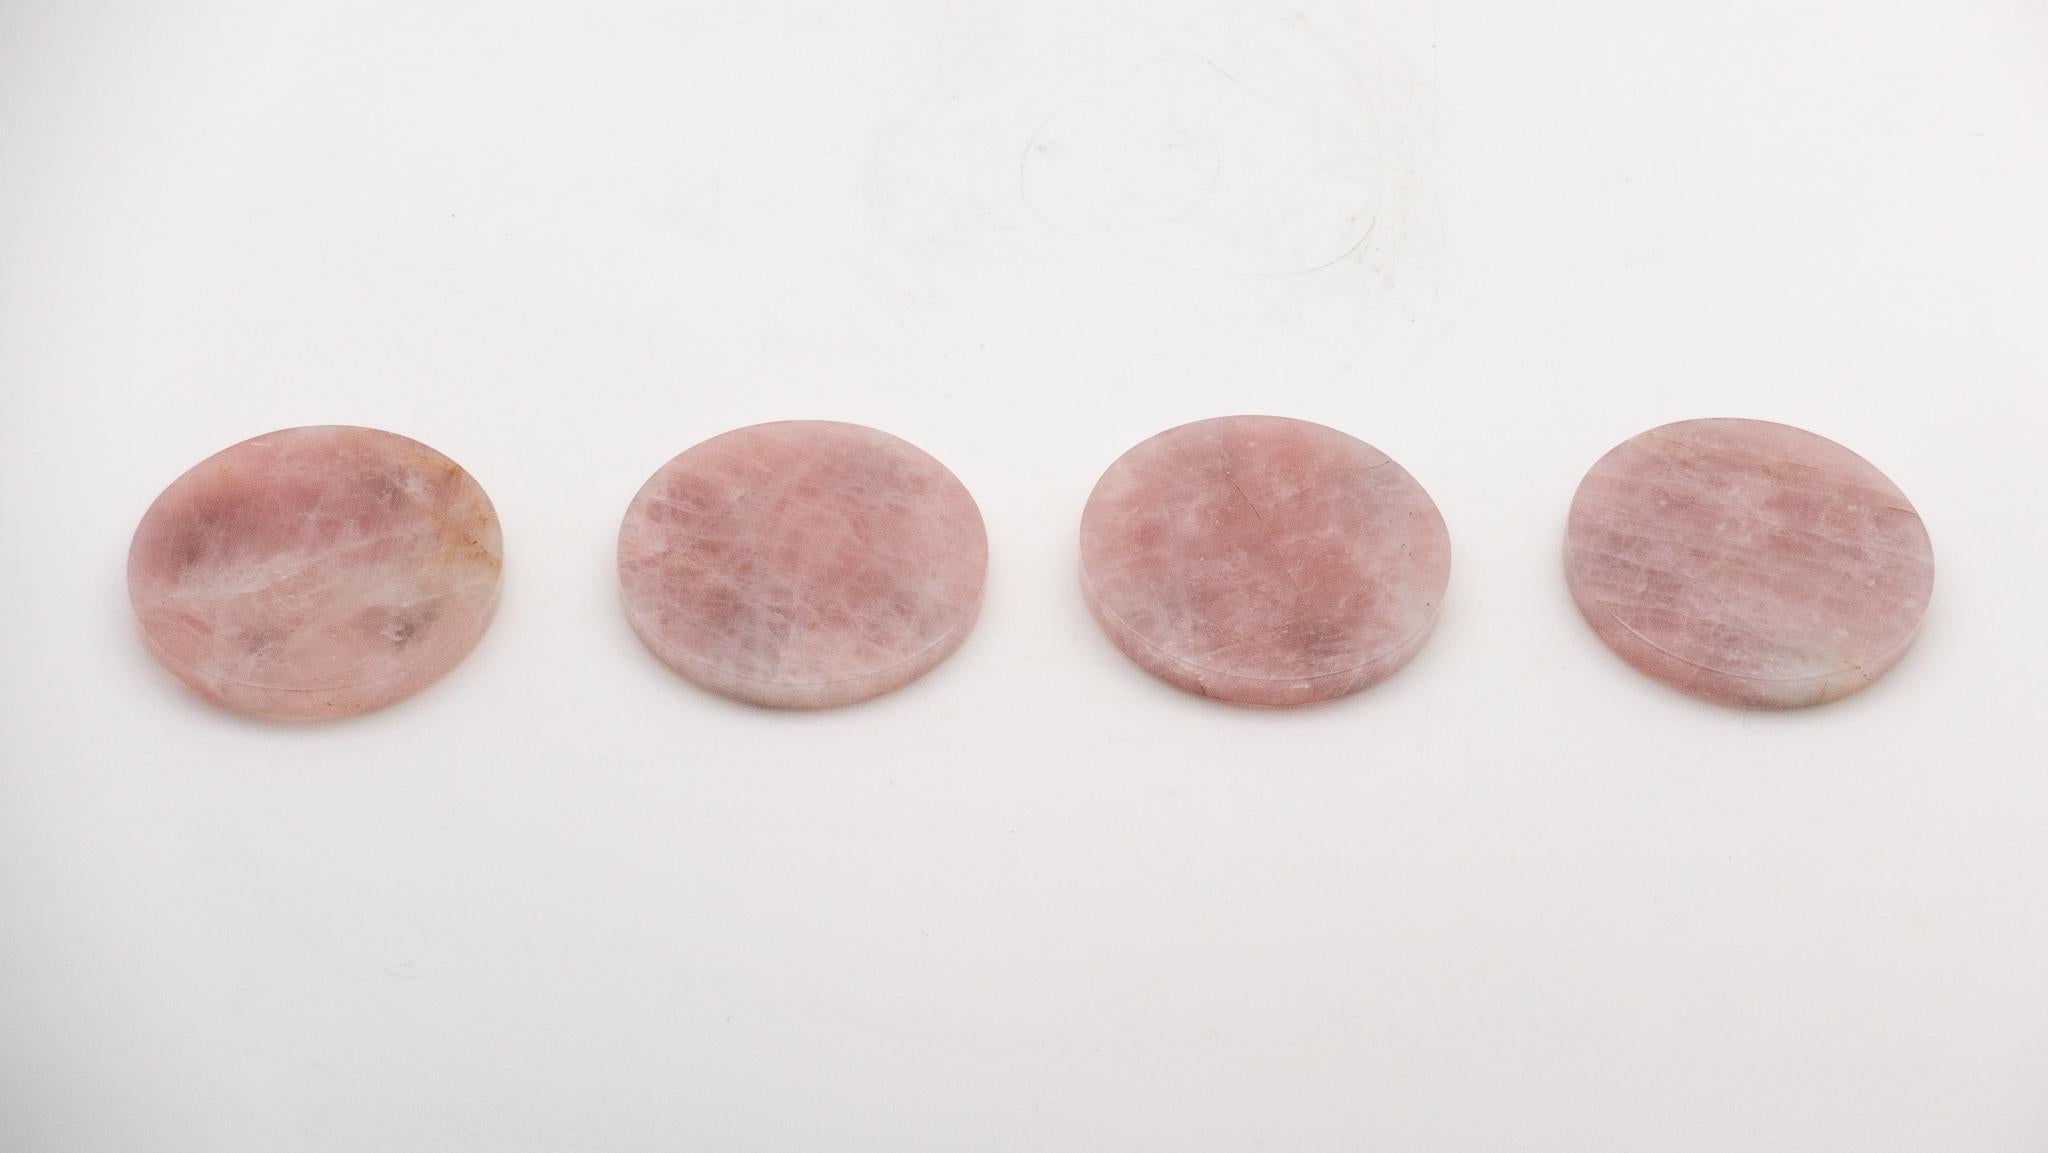 Set of four rose quartz beverage coasters. Rose quartz is a variety of quartz immediately recognizable among other quartz varieties by its soft pink hue.